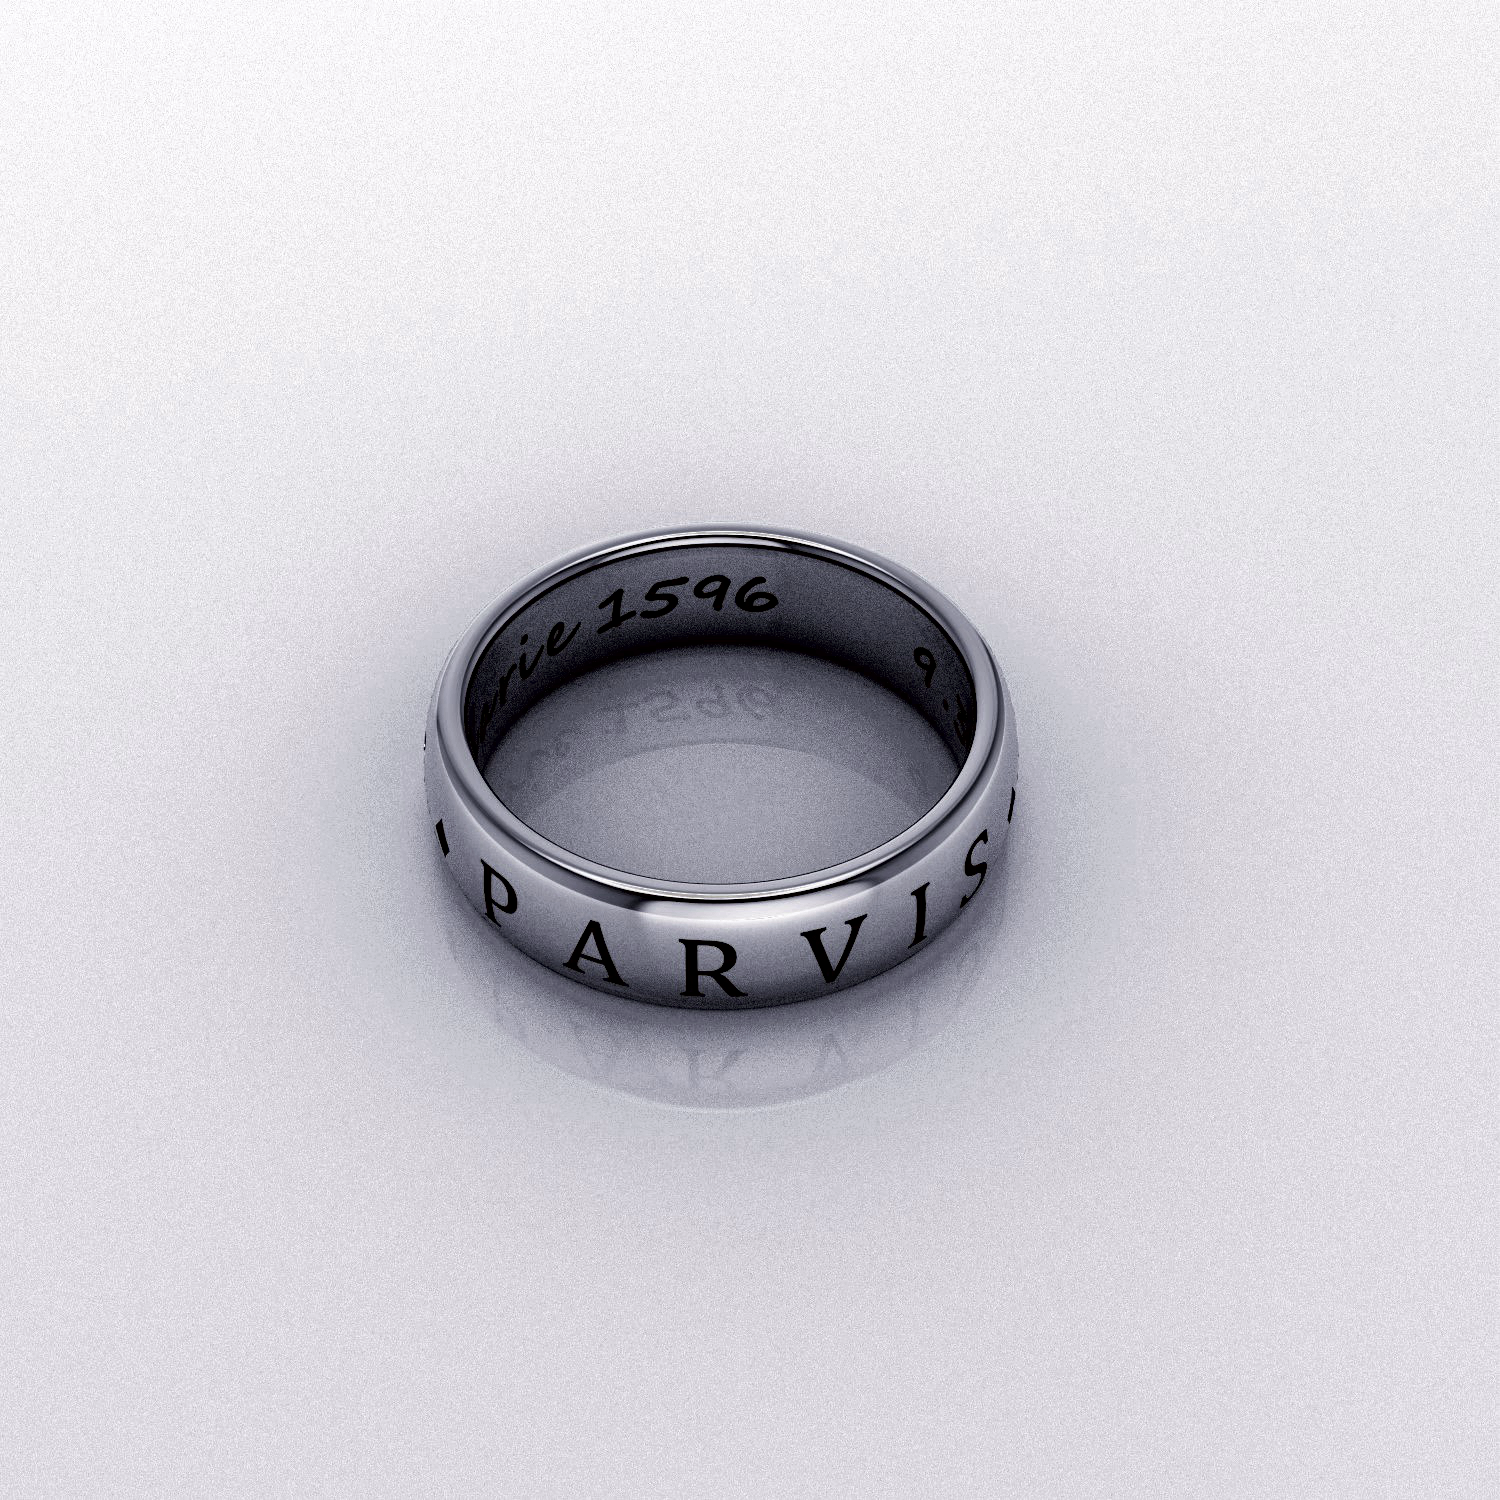 CUSTOM Sic Parvis Magna Ring (AVB29GTUE) by Braden_E